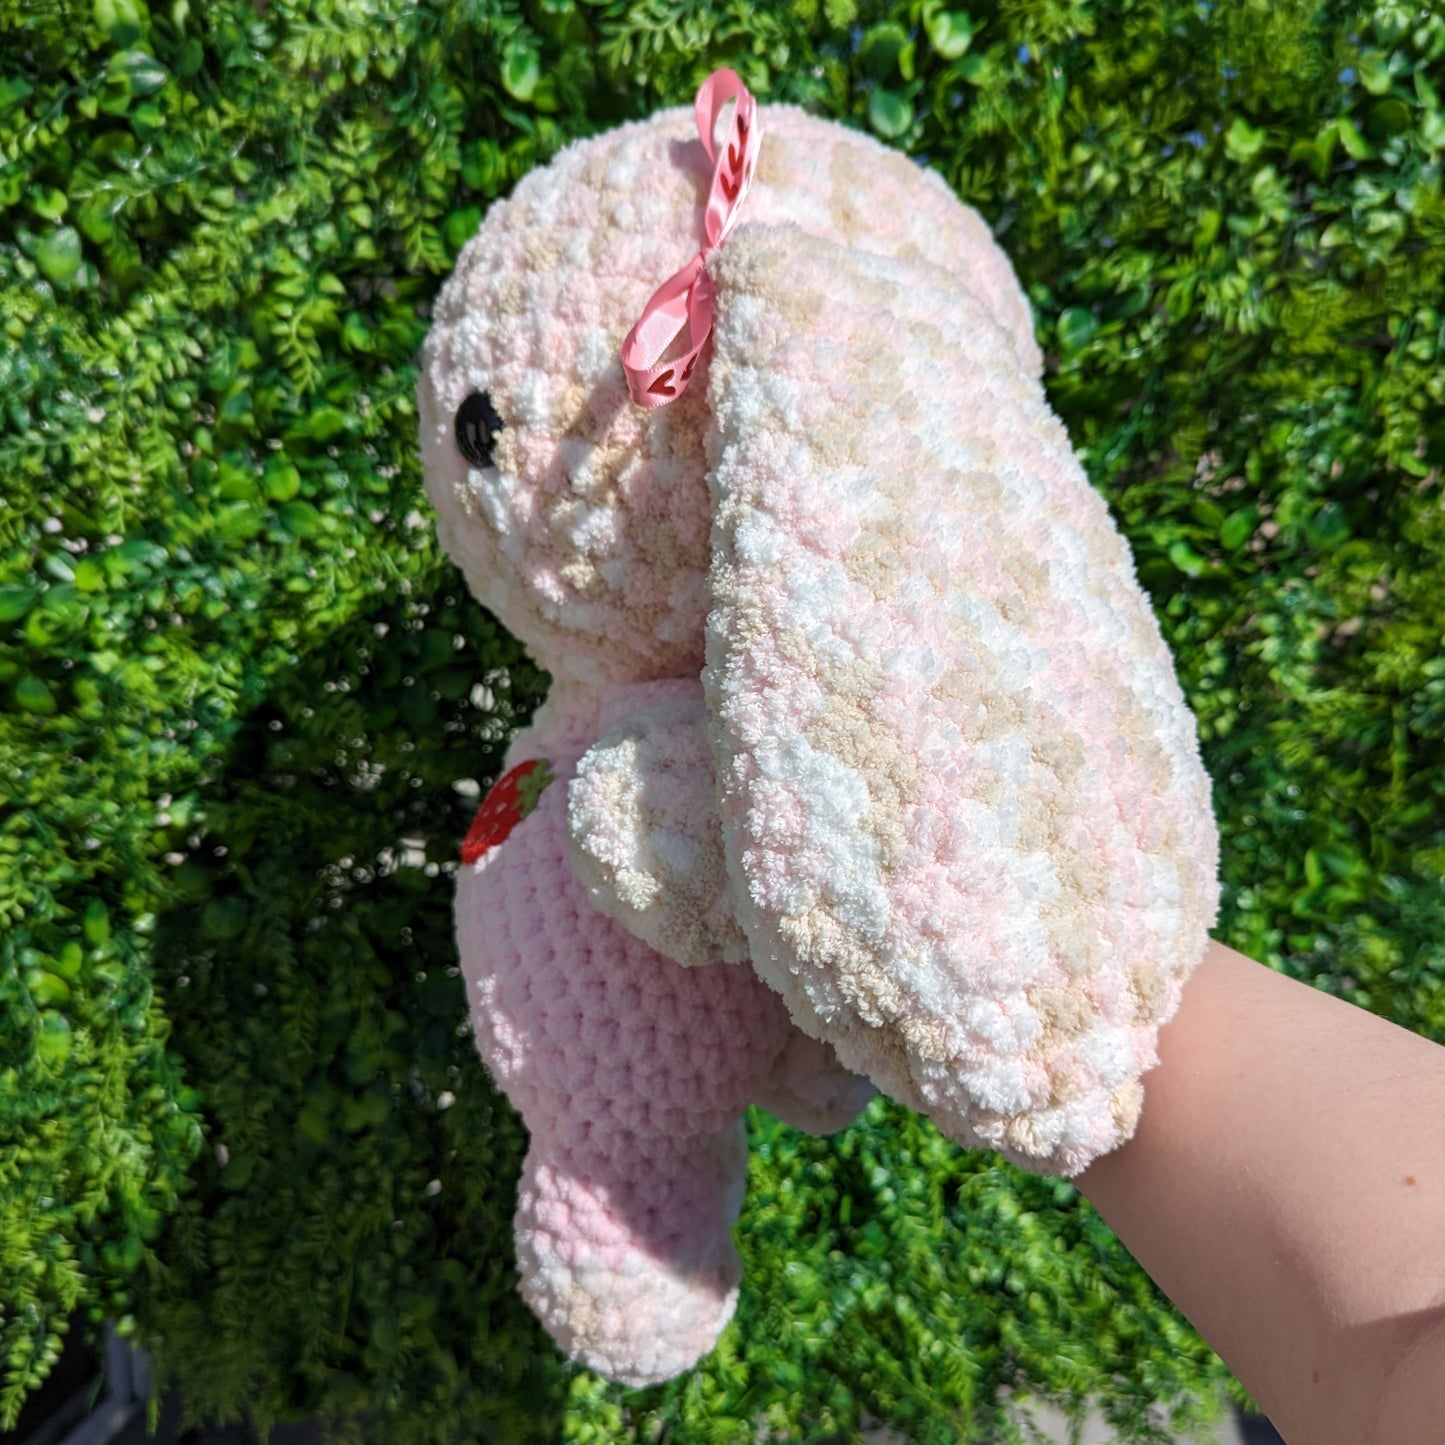 Jumbo Fuzzy Strawberry Shortcake Bunny in Onesie Crochet Plushie [Archived]